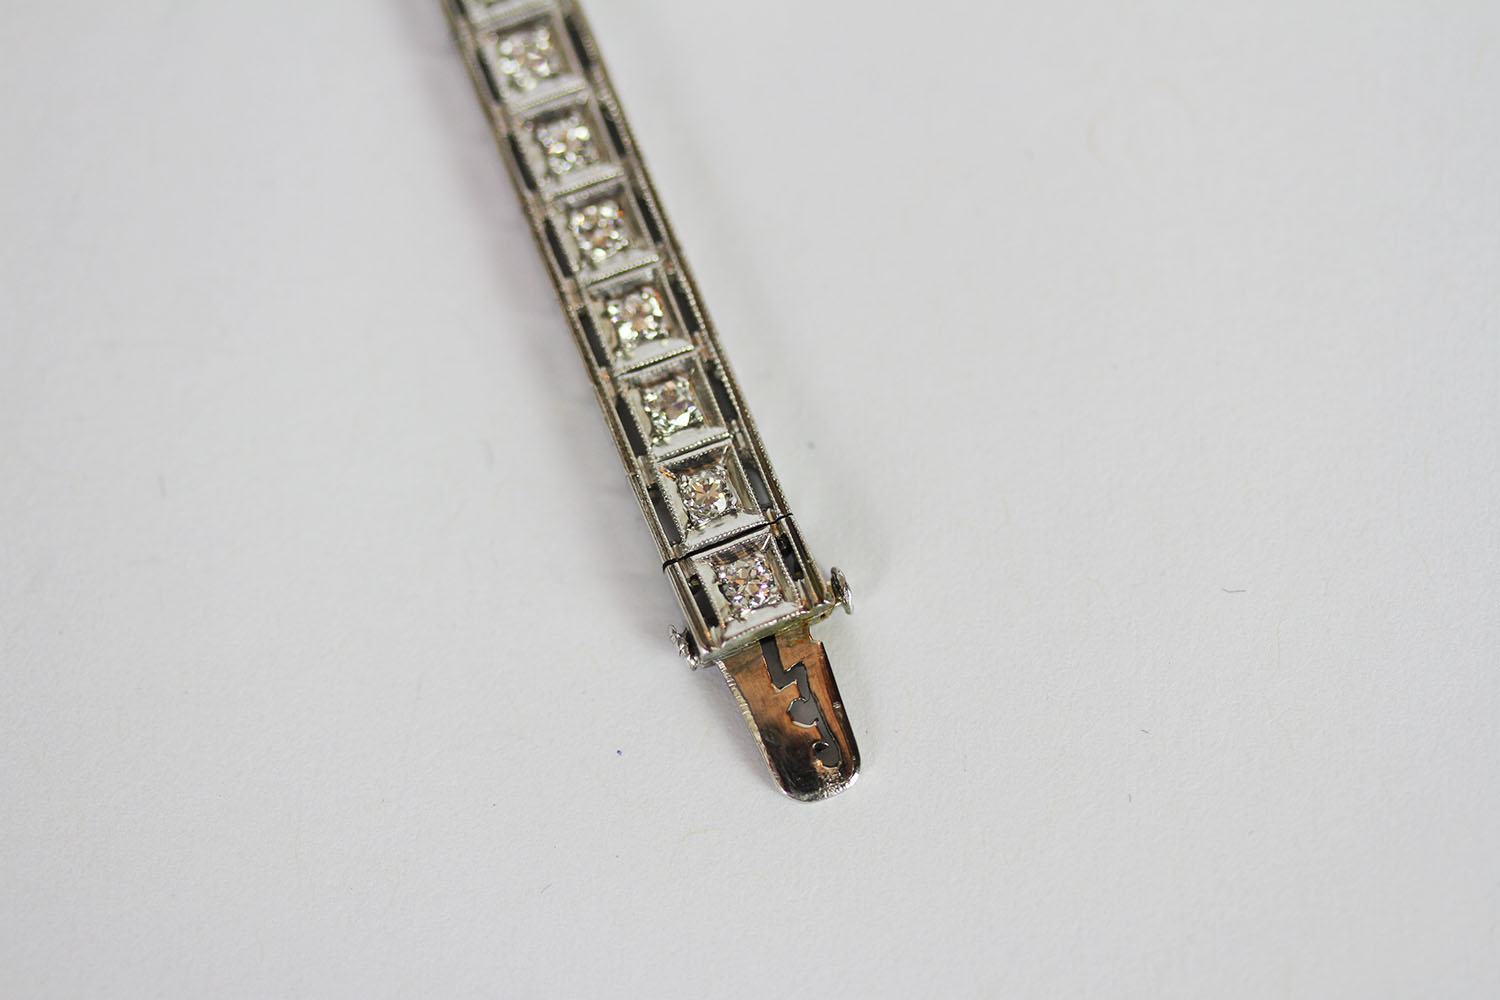 Sapphire and Diamond bracelet, set with 14 baguette cut sapphires and 2 trillion cut sapphires, - Image 5 of 5